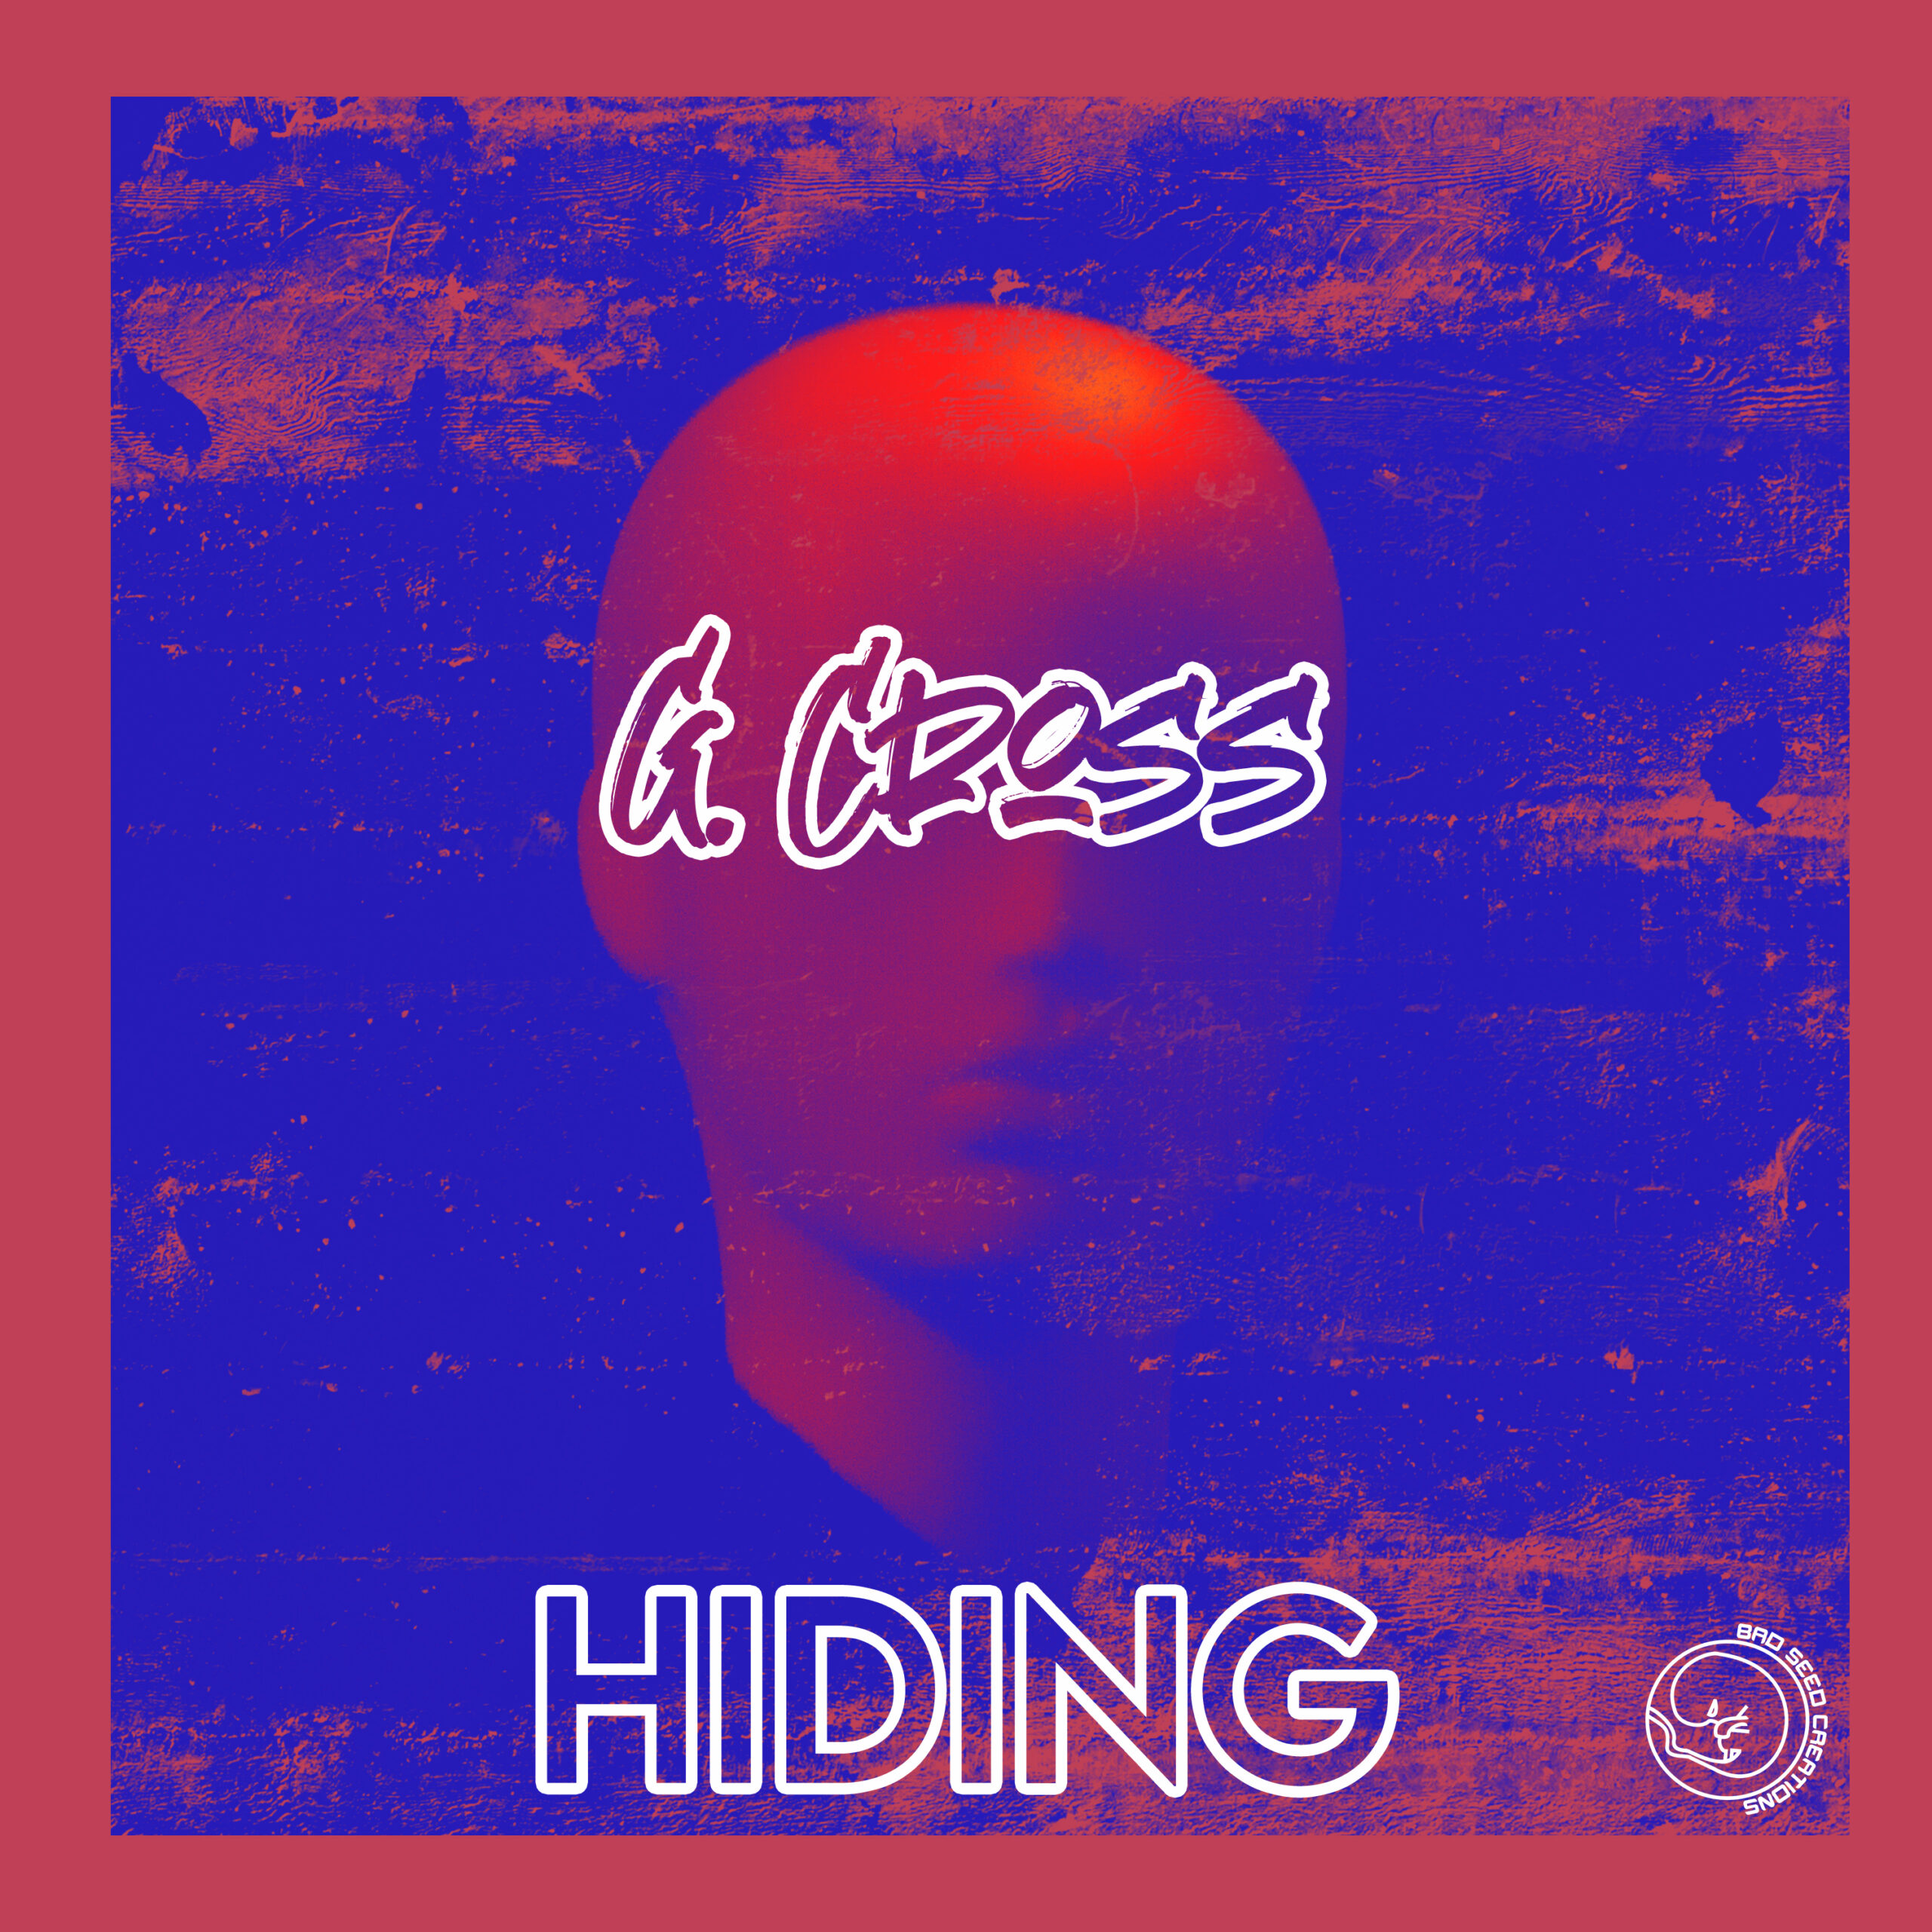 G. Cross Hiding